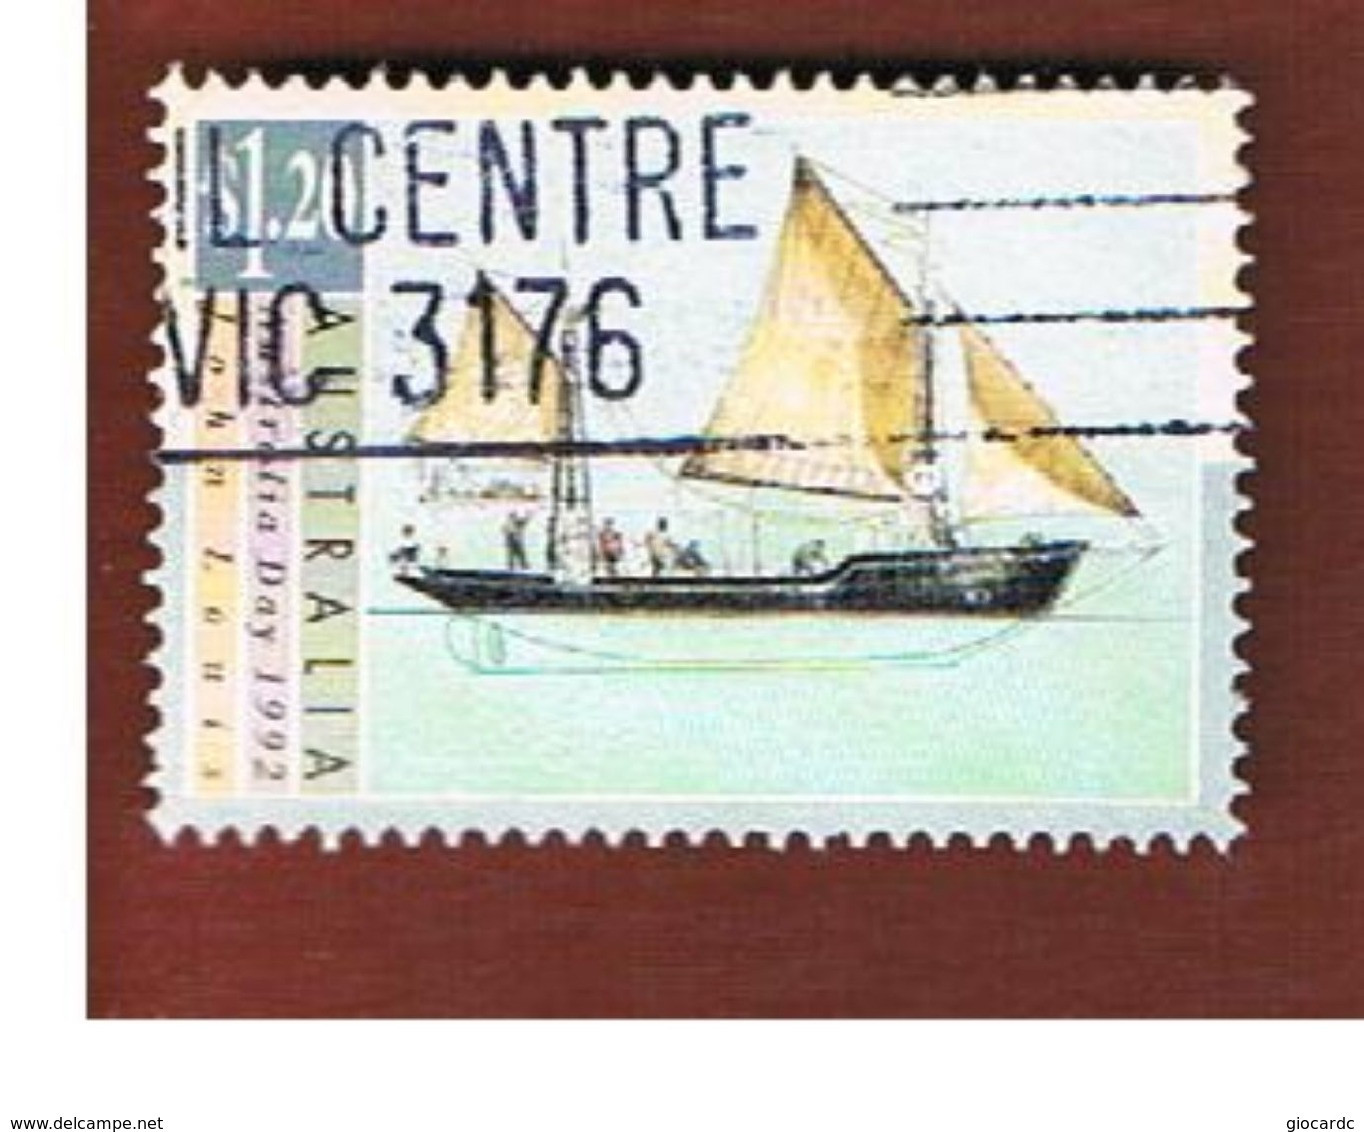 AUSTRALIA  -  SG 1336  -      1992 SHIPS: J. LUIS        -       USED - Gebraucht